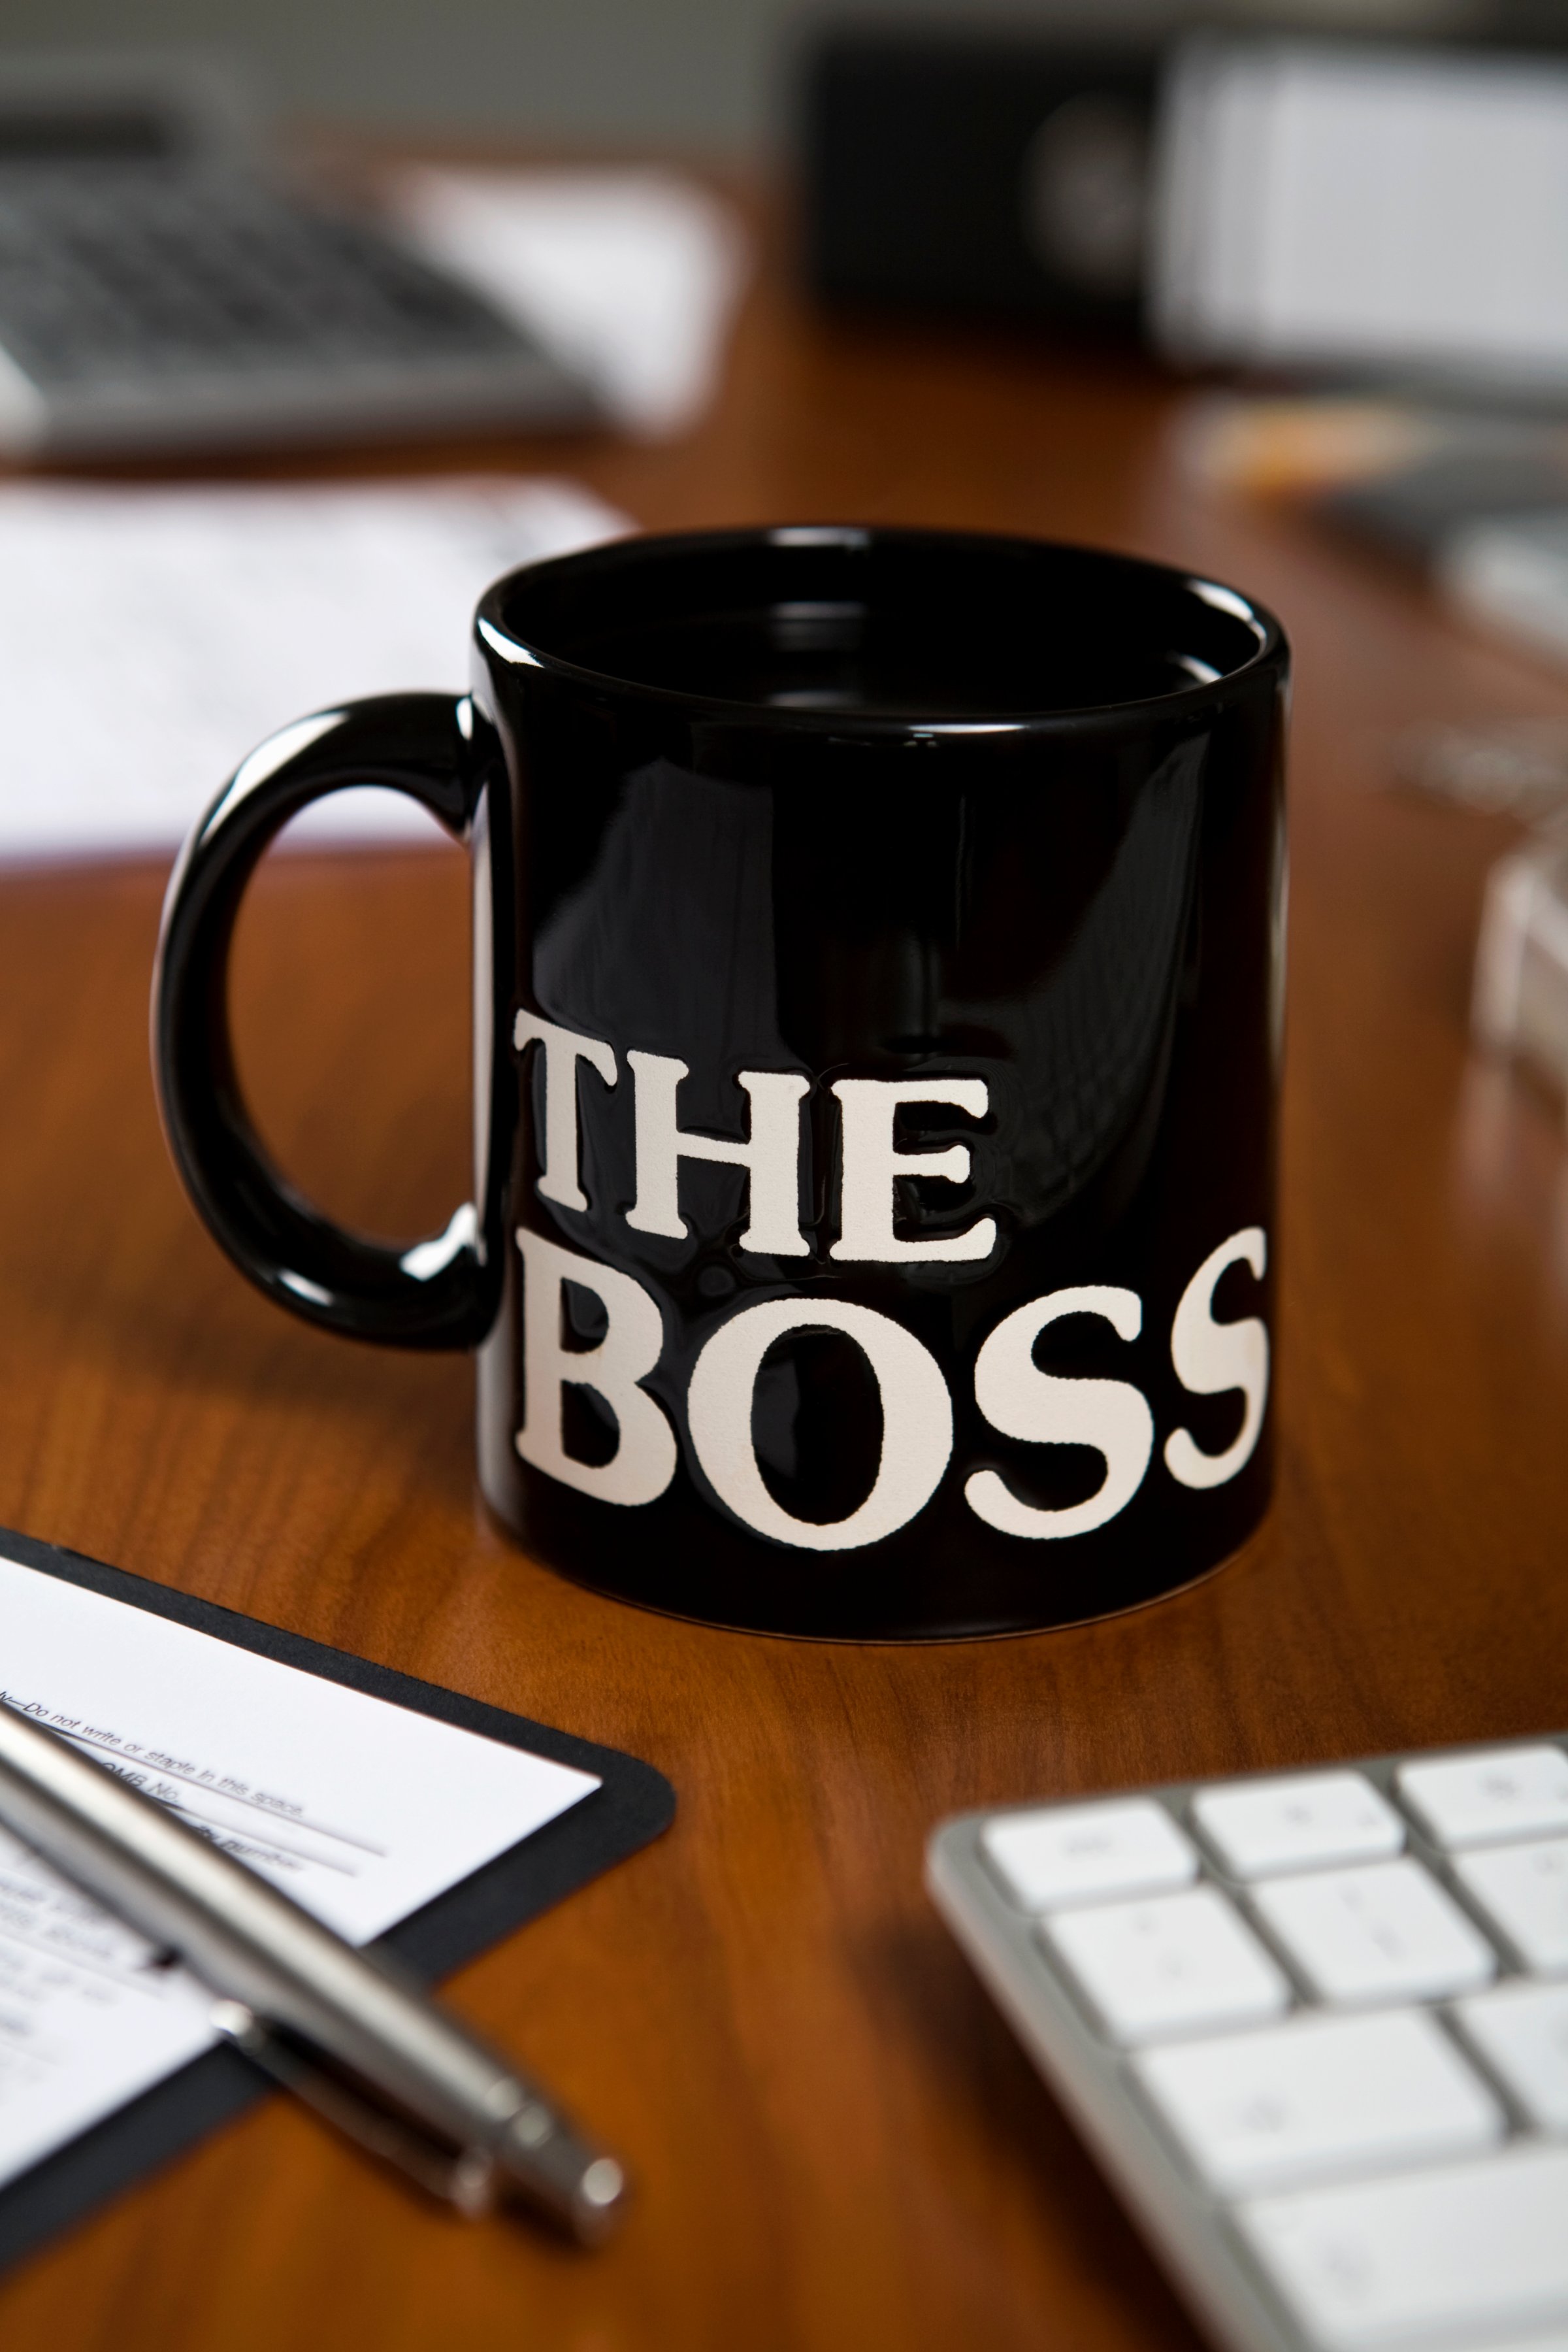 The Boss mug on a desk